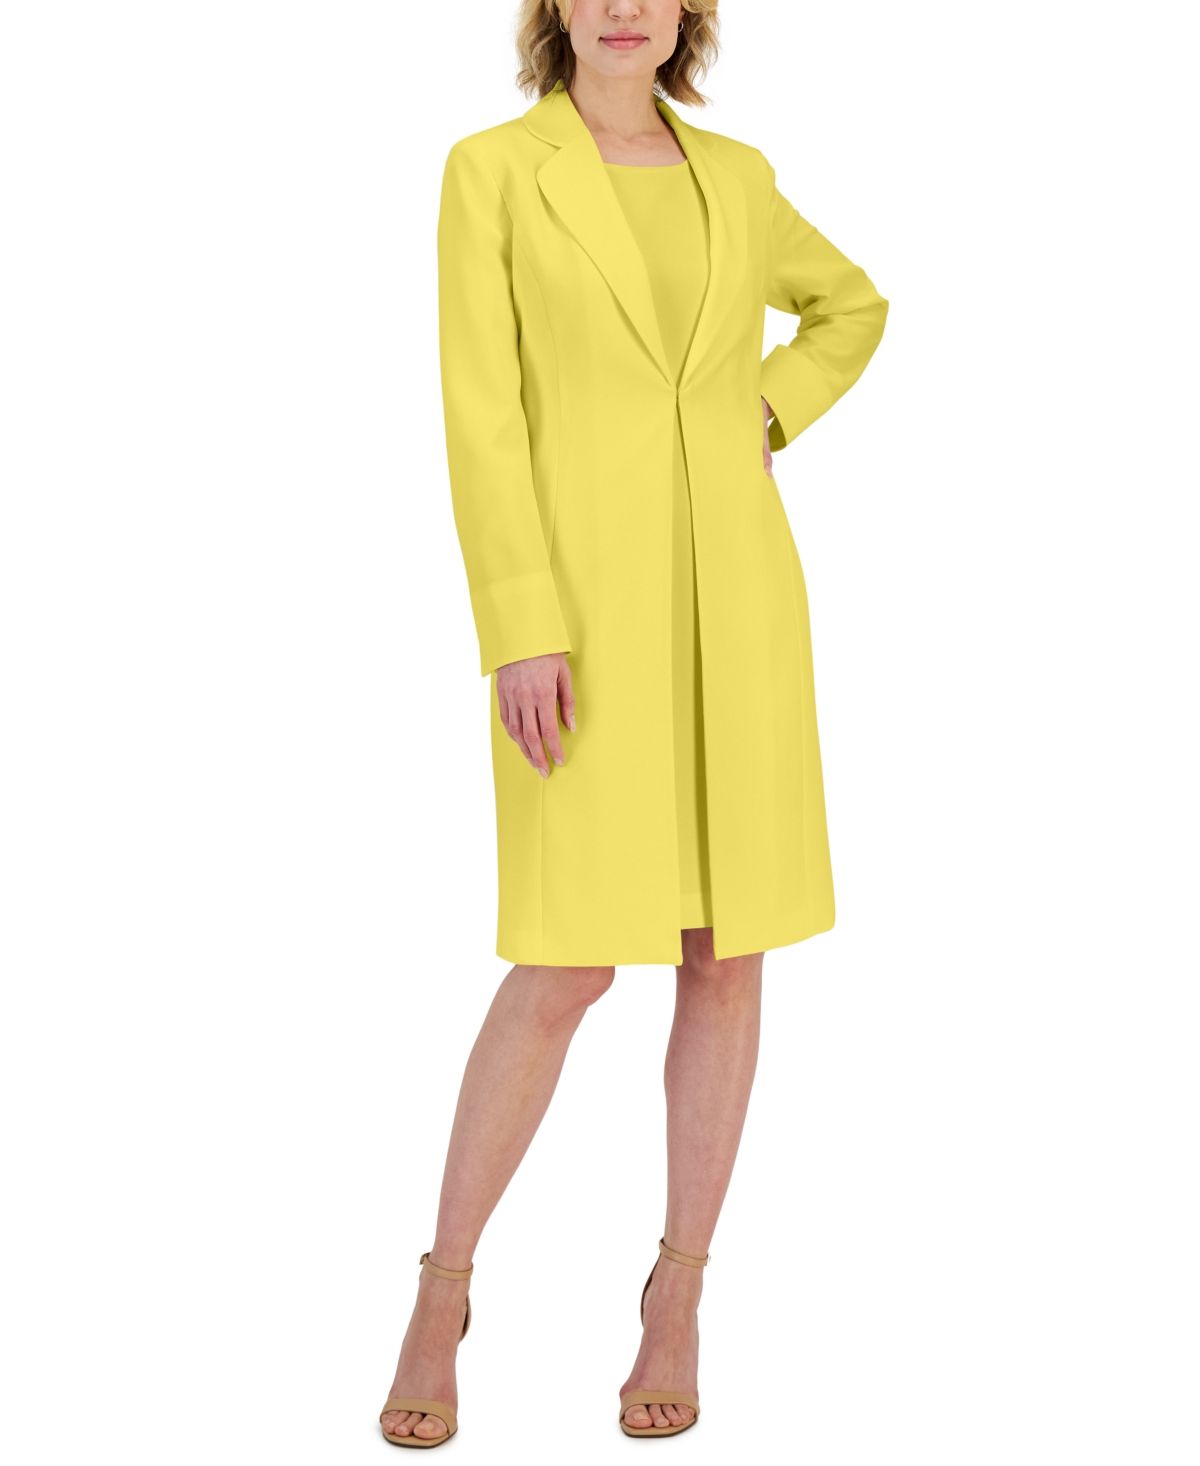 Le Suit Women's Crepe Topper Jacket & Sheath Dress Suit, Regular And Petite Sizes In Golden Sunset